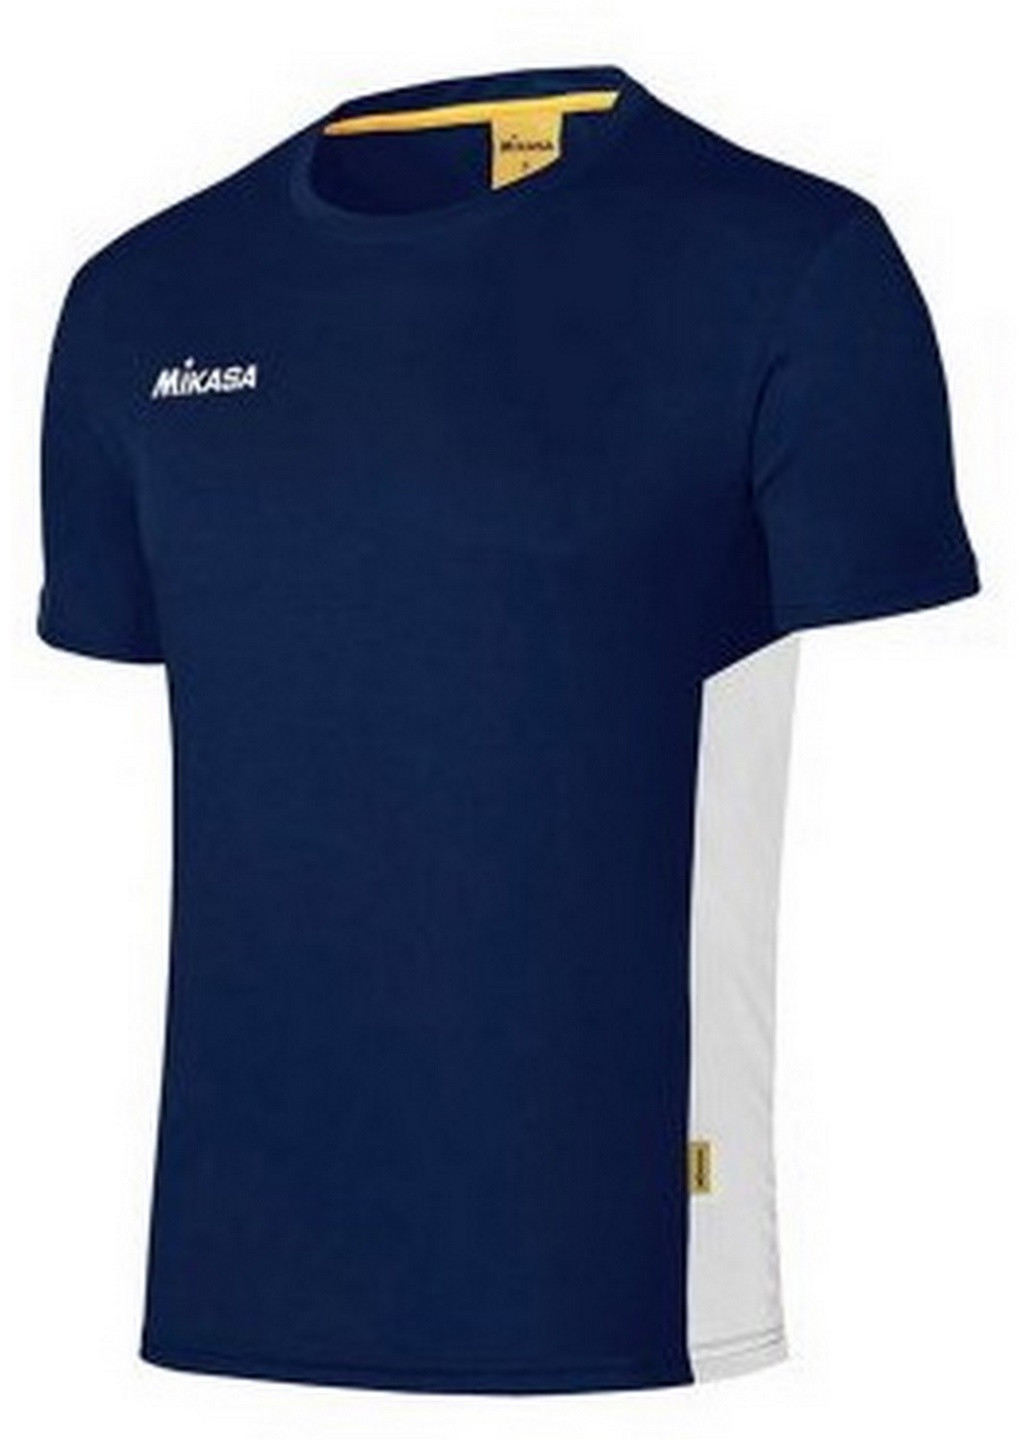 Синяя мужская футболка для волейбола mt261-061 Mikasa